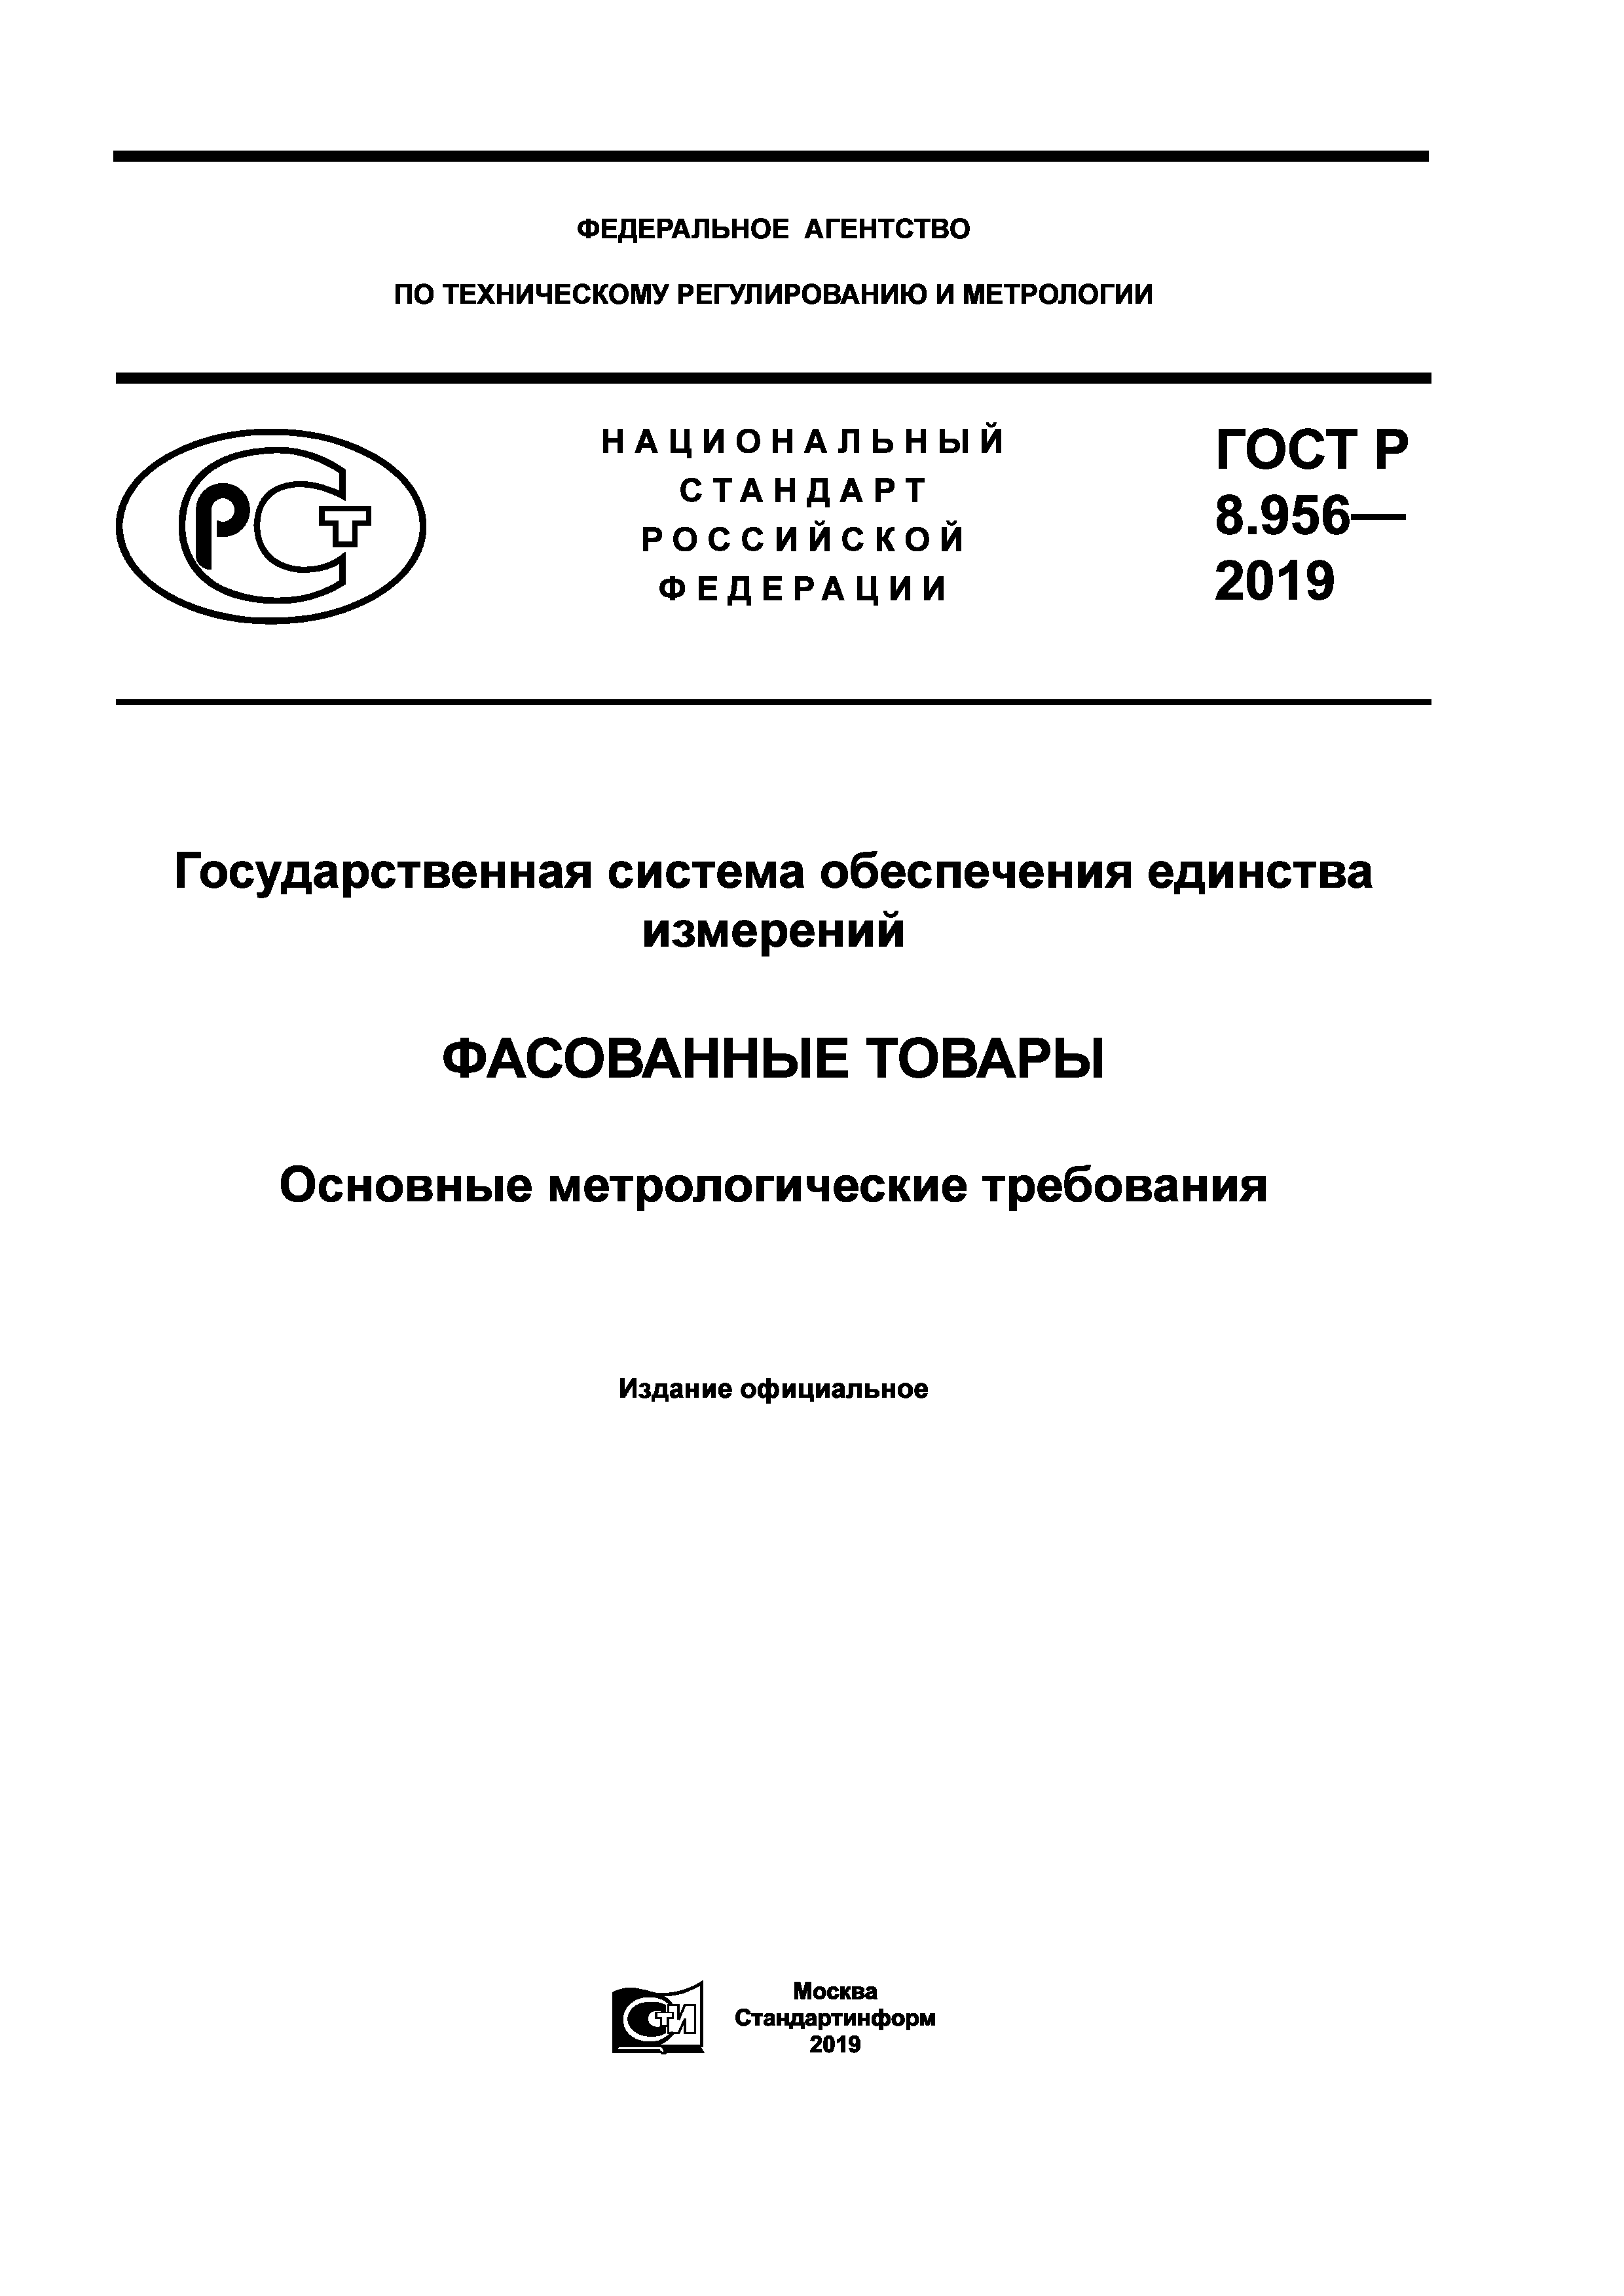 ГОСТ Р 8.956-2019